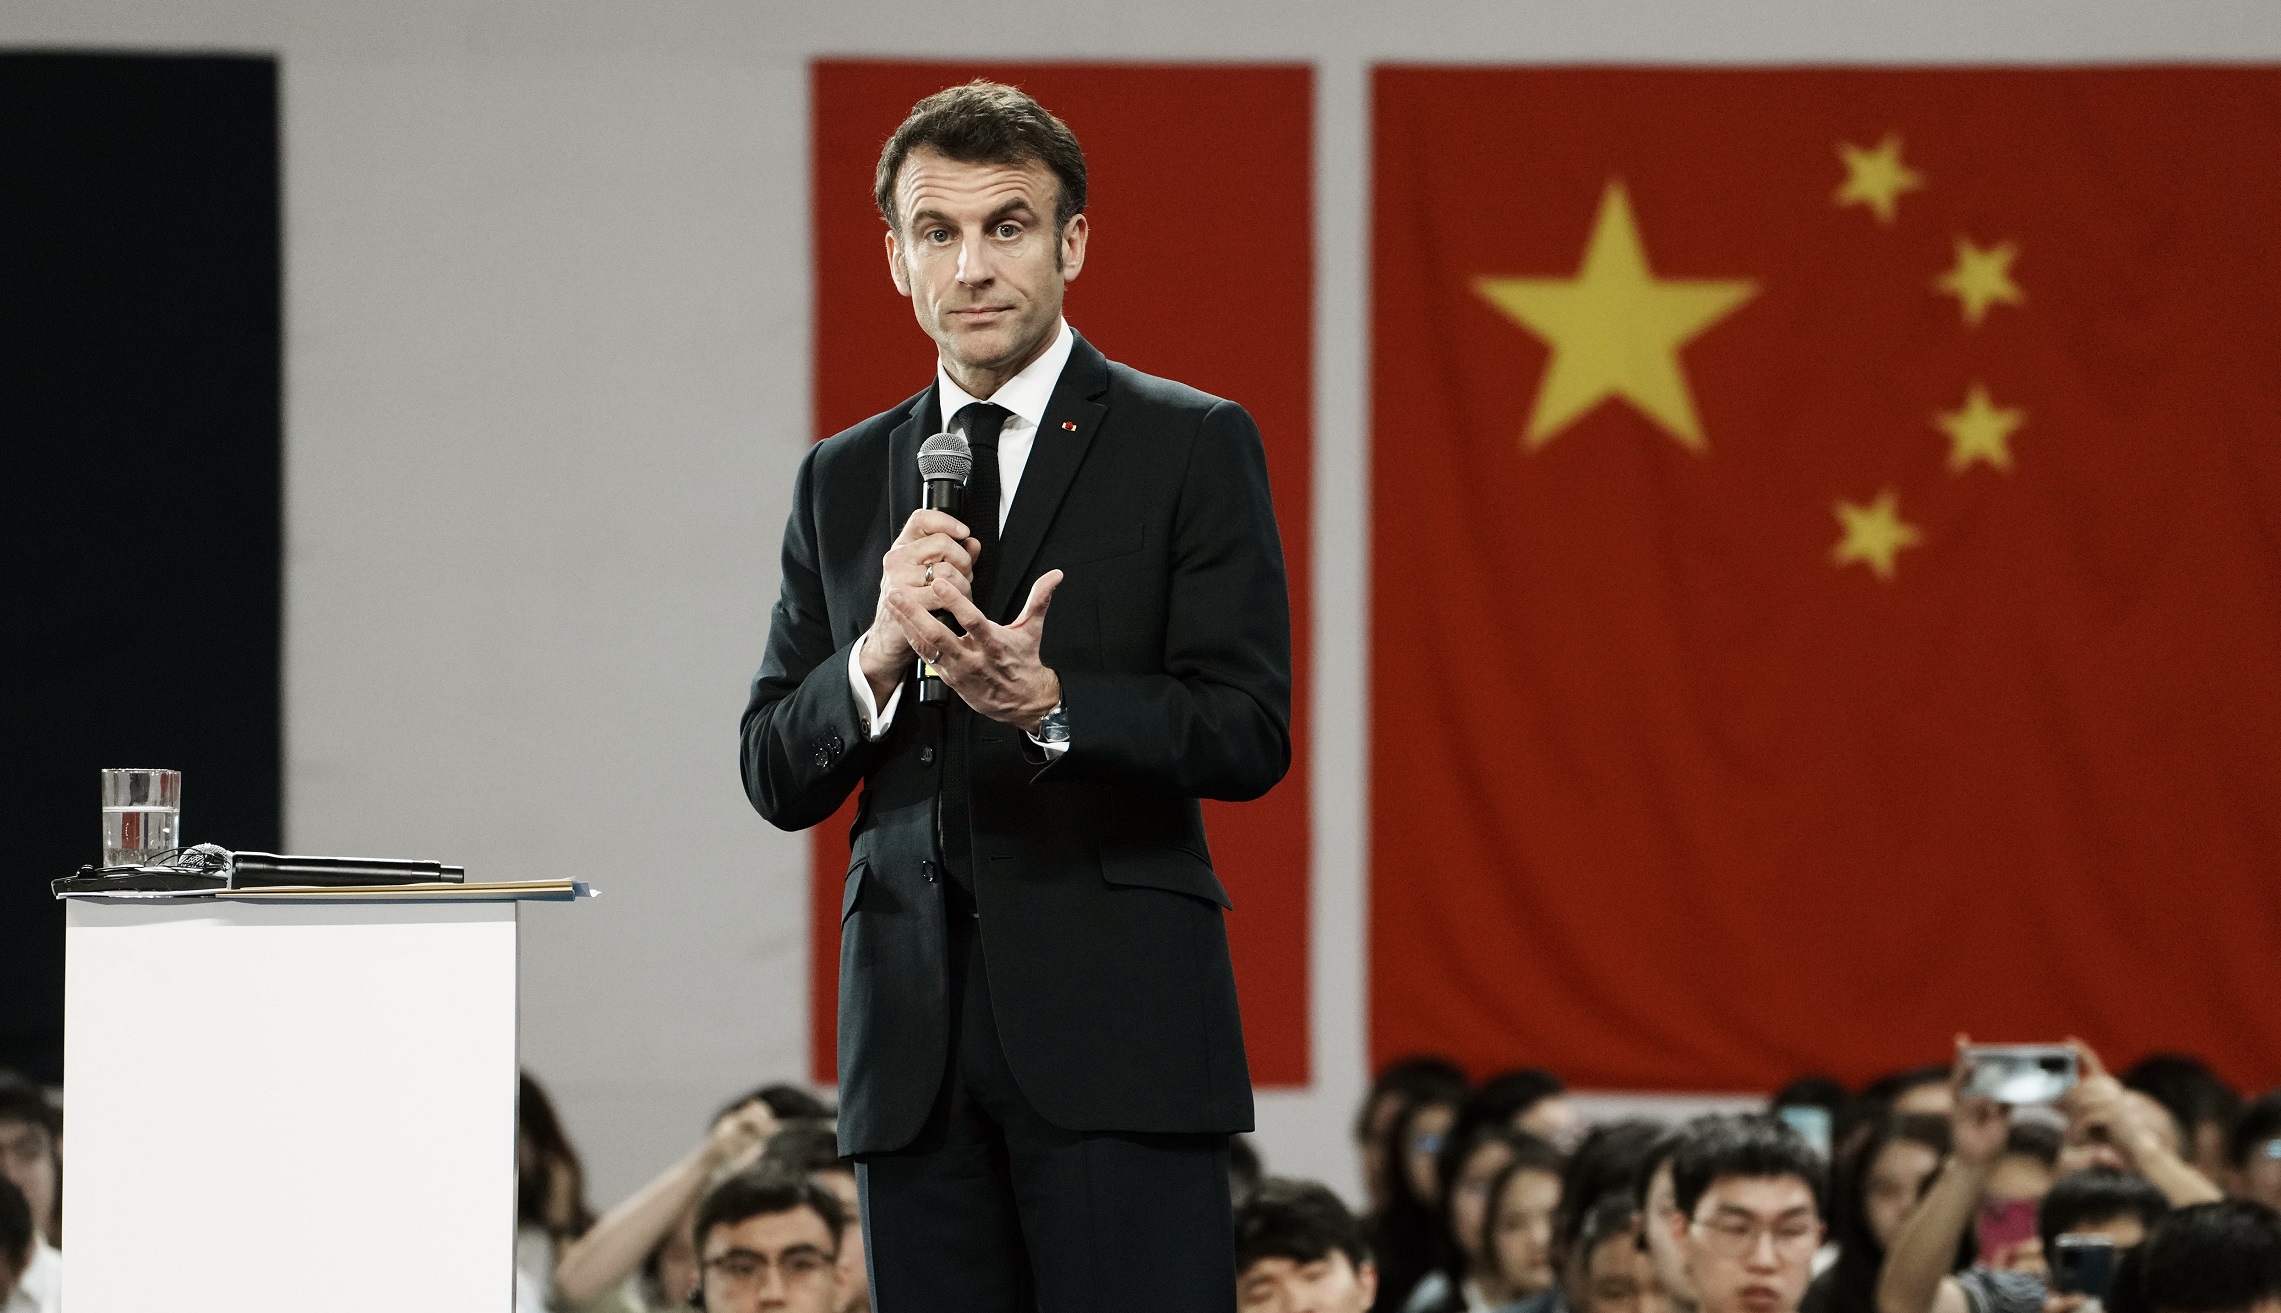 Americans must recognize that Macron has chosen China - Washington Examiner